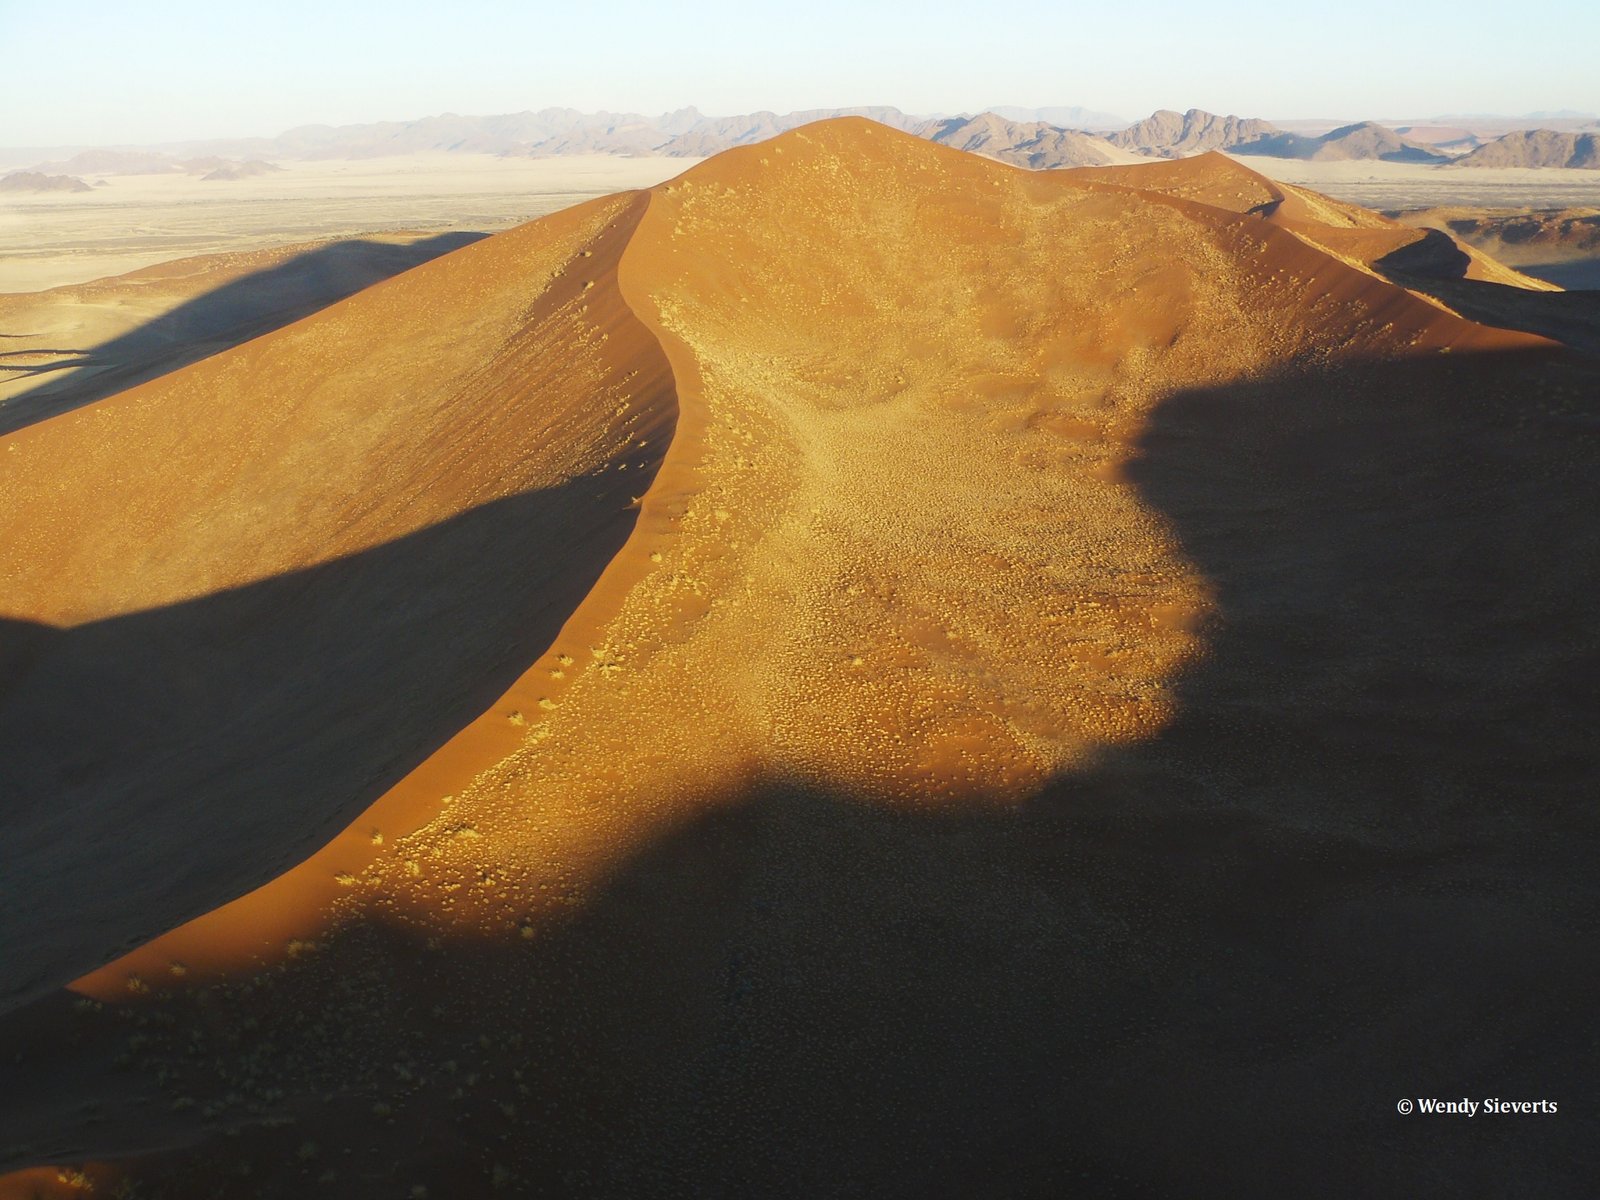 Grote rood met bruine zandduin in de Sossusvlei in Namibië